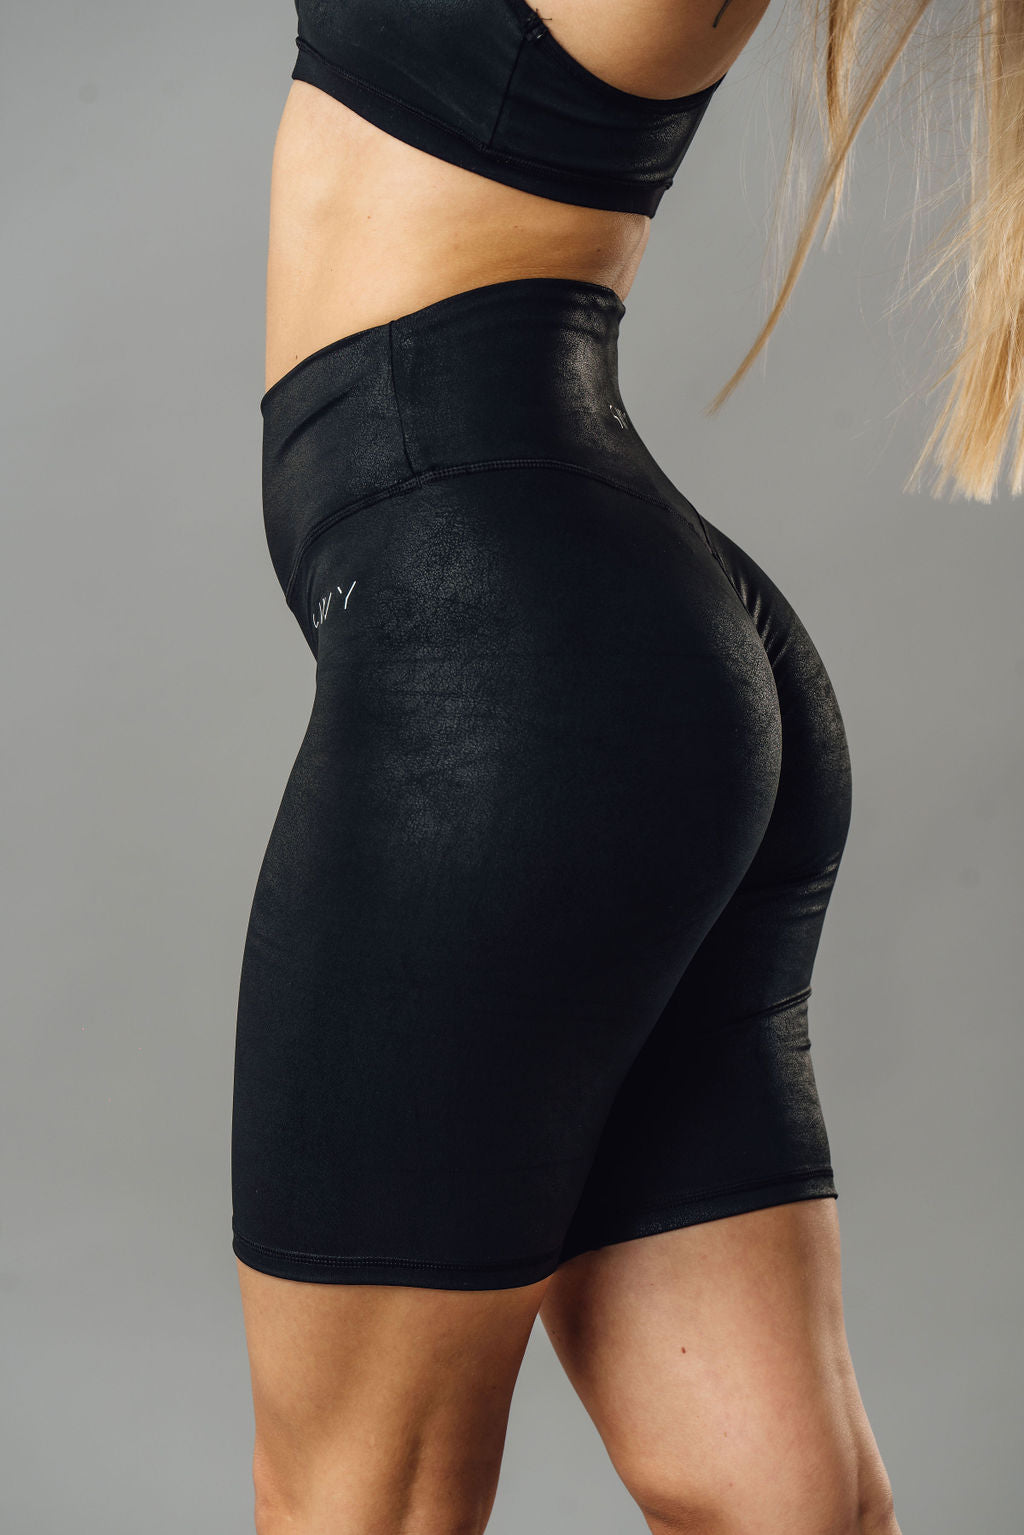 SoftLine scrunch biker shorts – SWY Brand